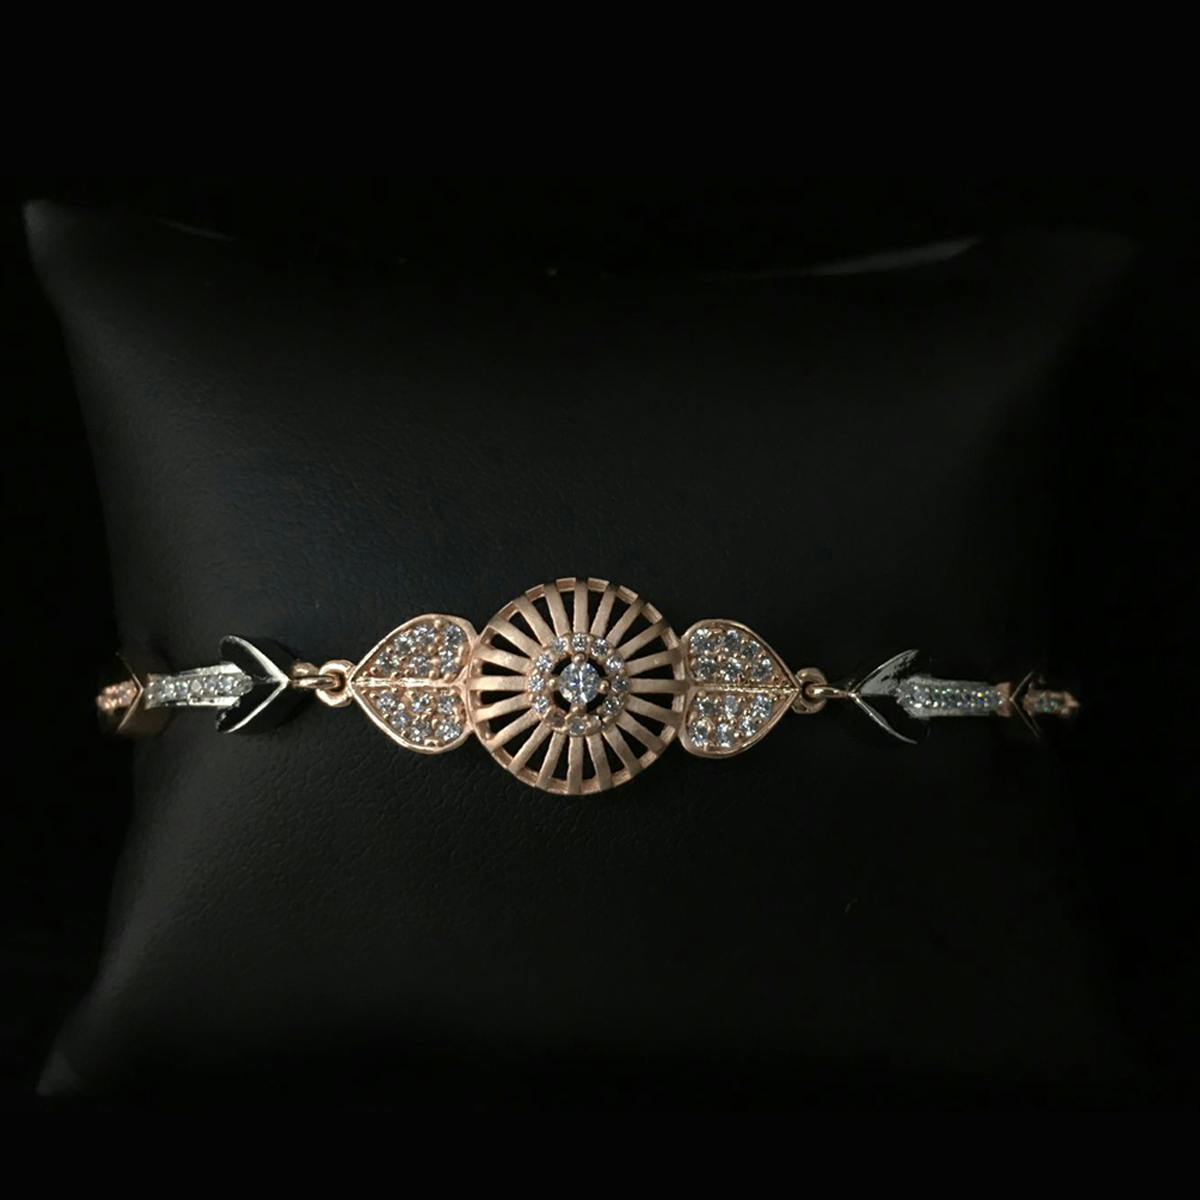 Delicate Dreamscape silver bracelet